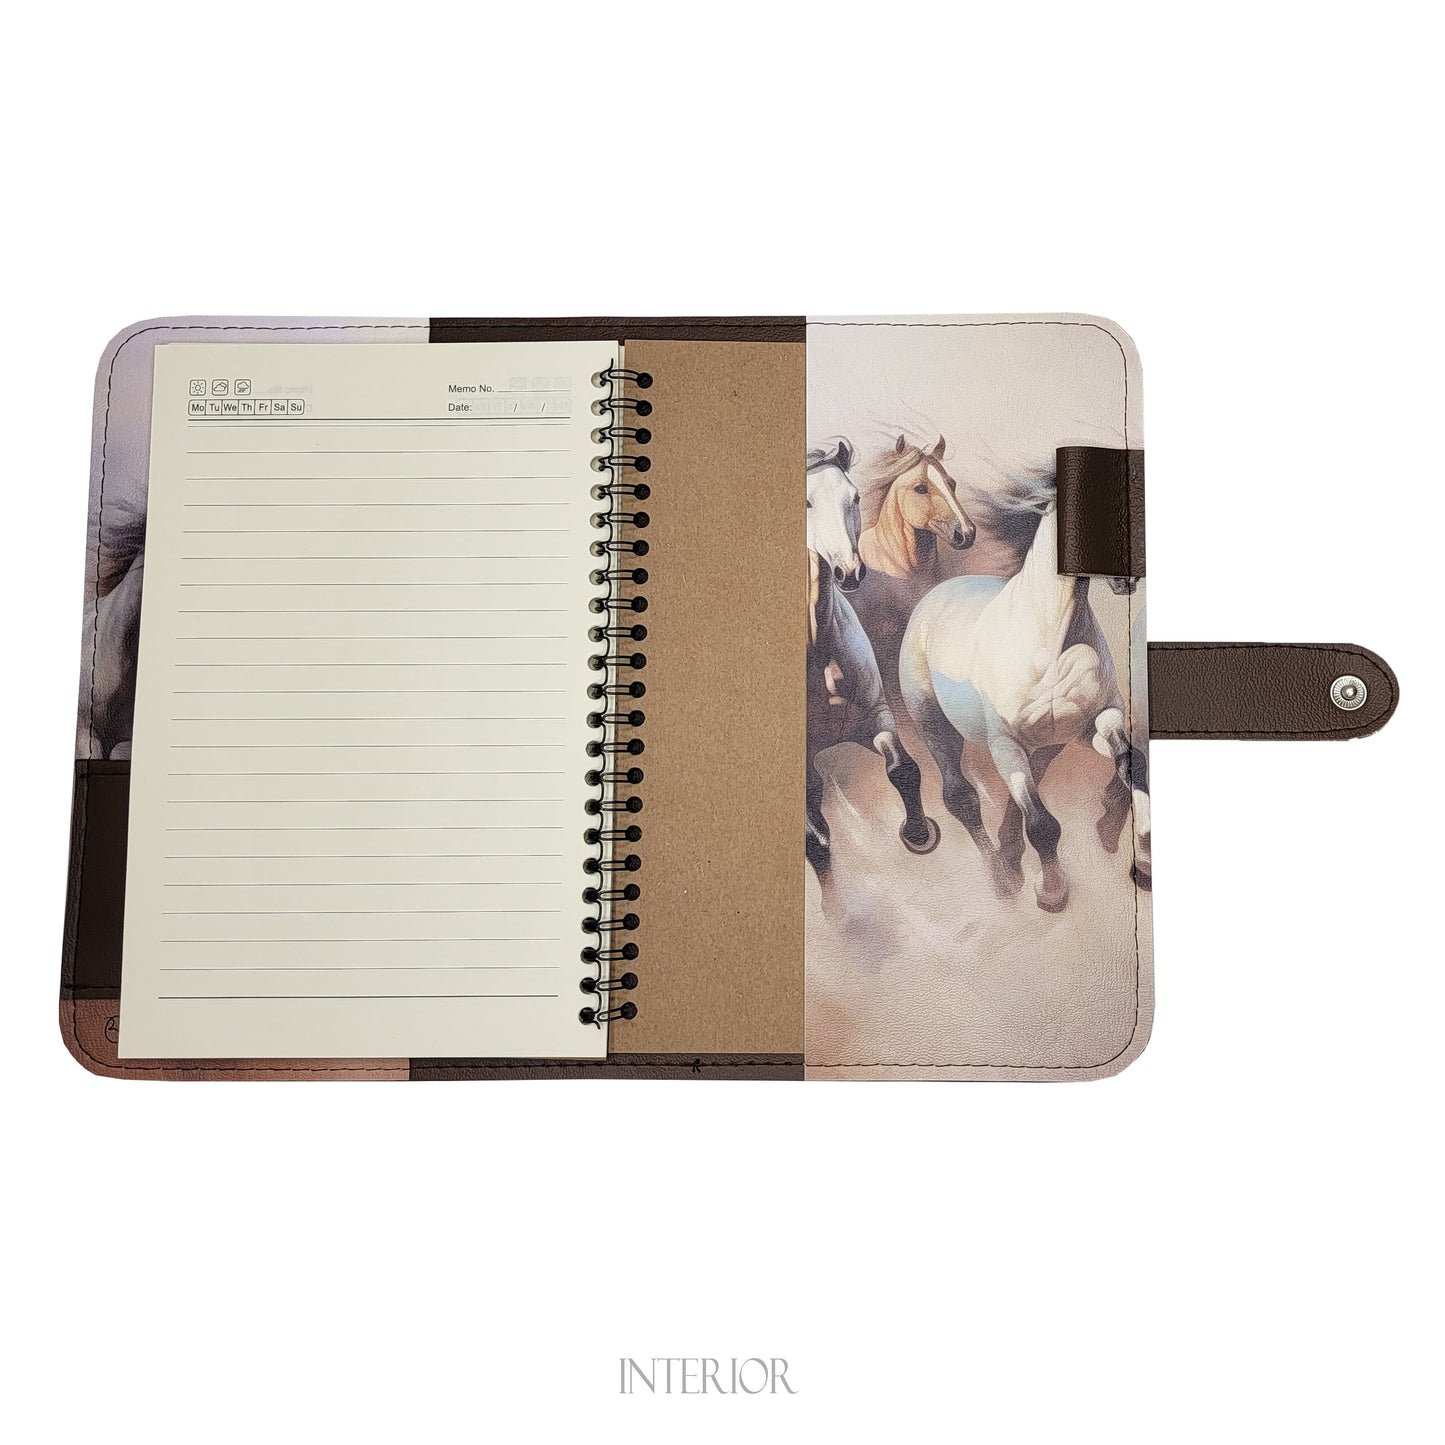 Horses- Notebook & Cover (dark brown)